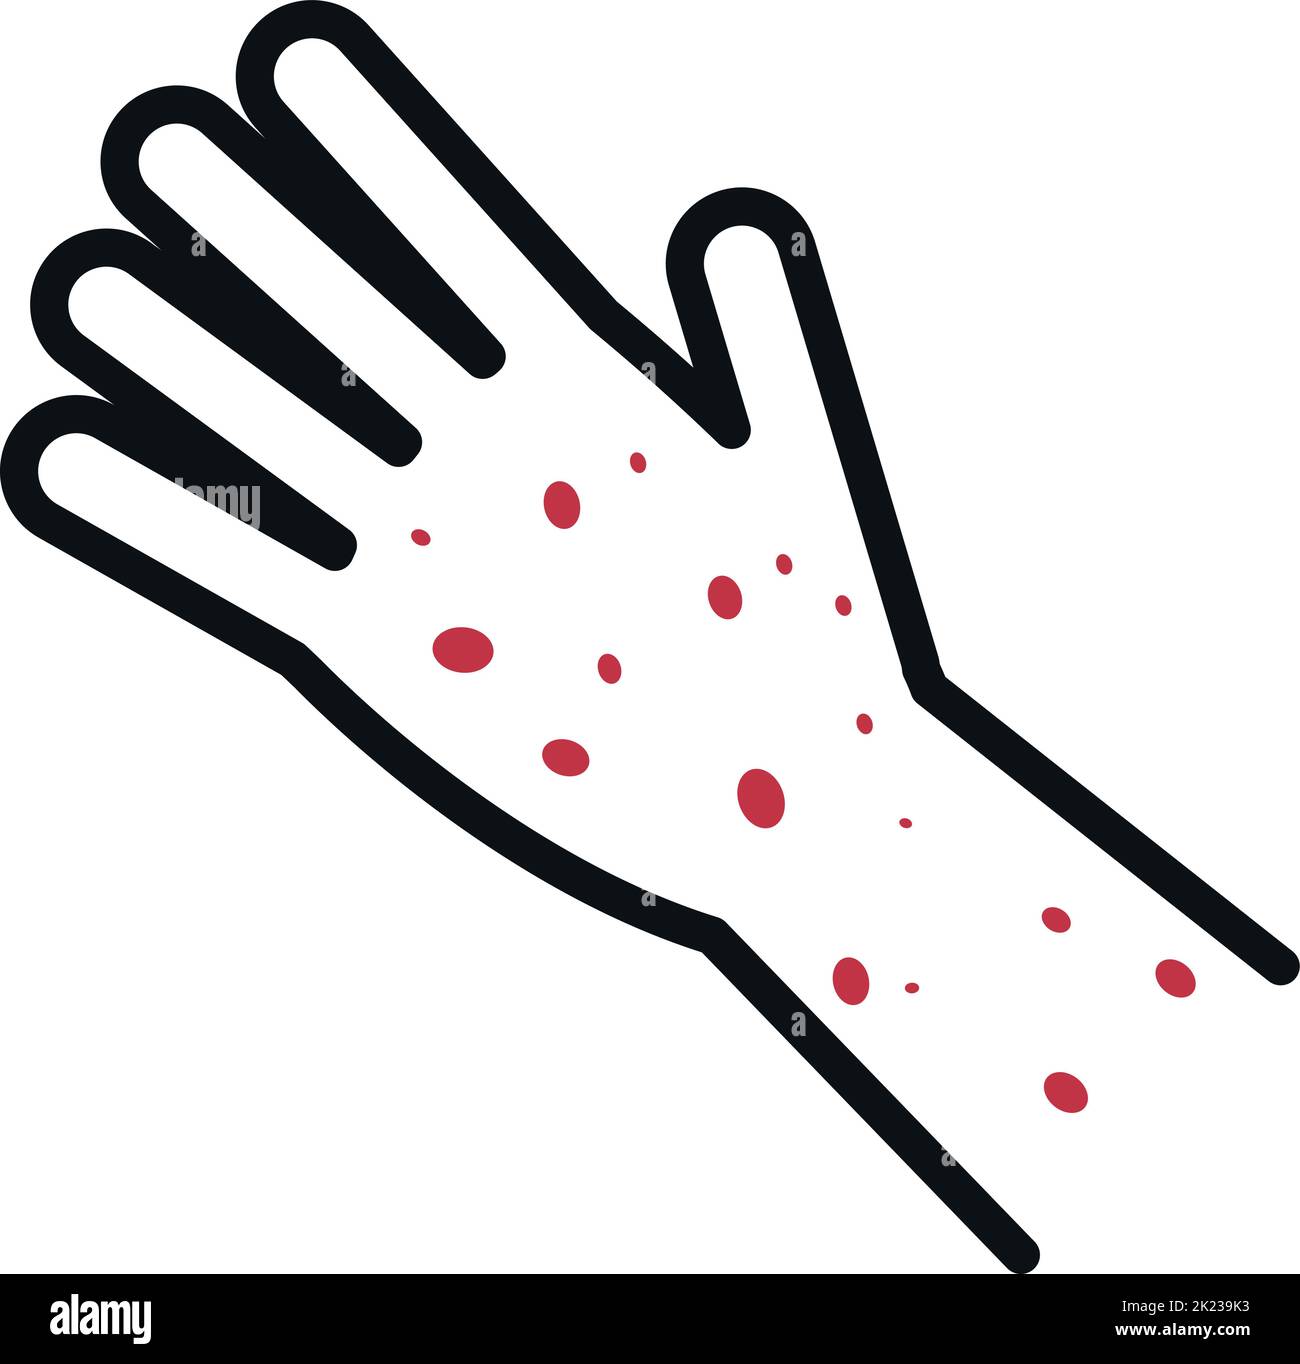 Red rash on human hand. Disease symptom icon Stock Vector